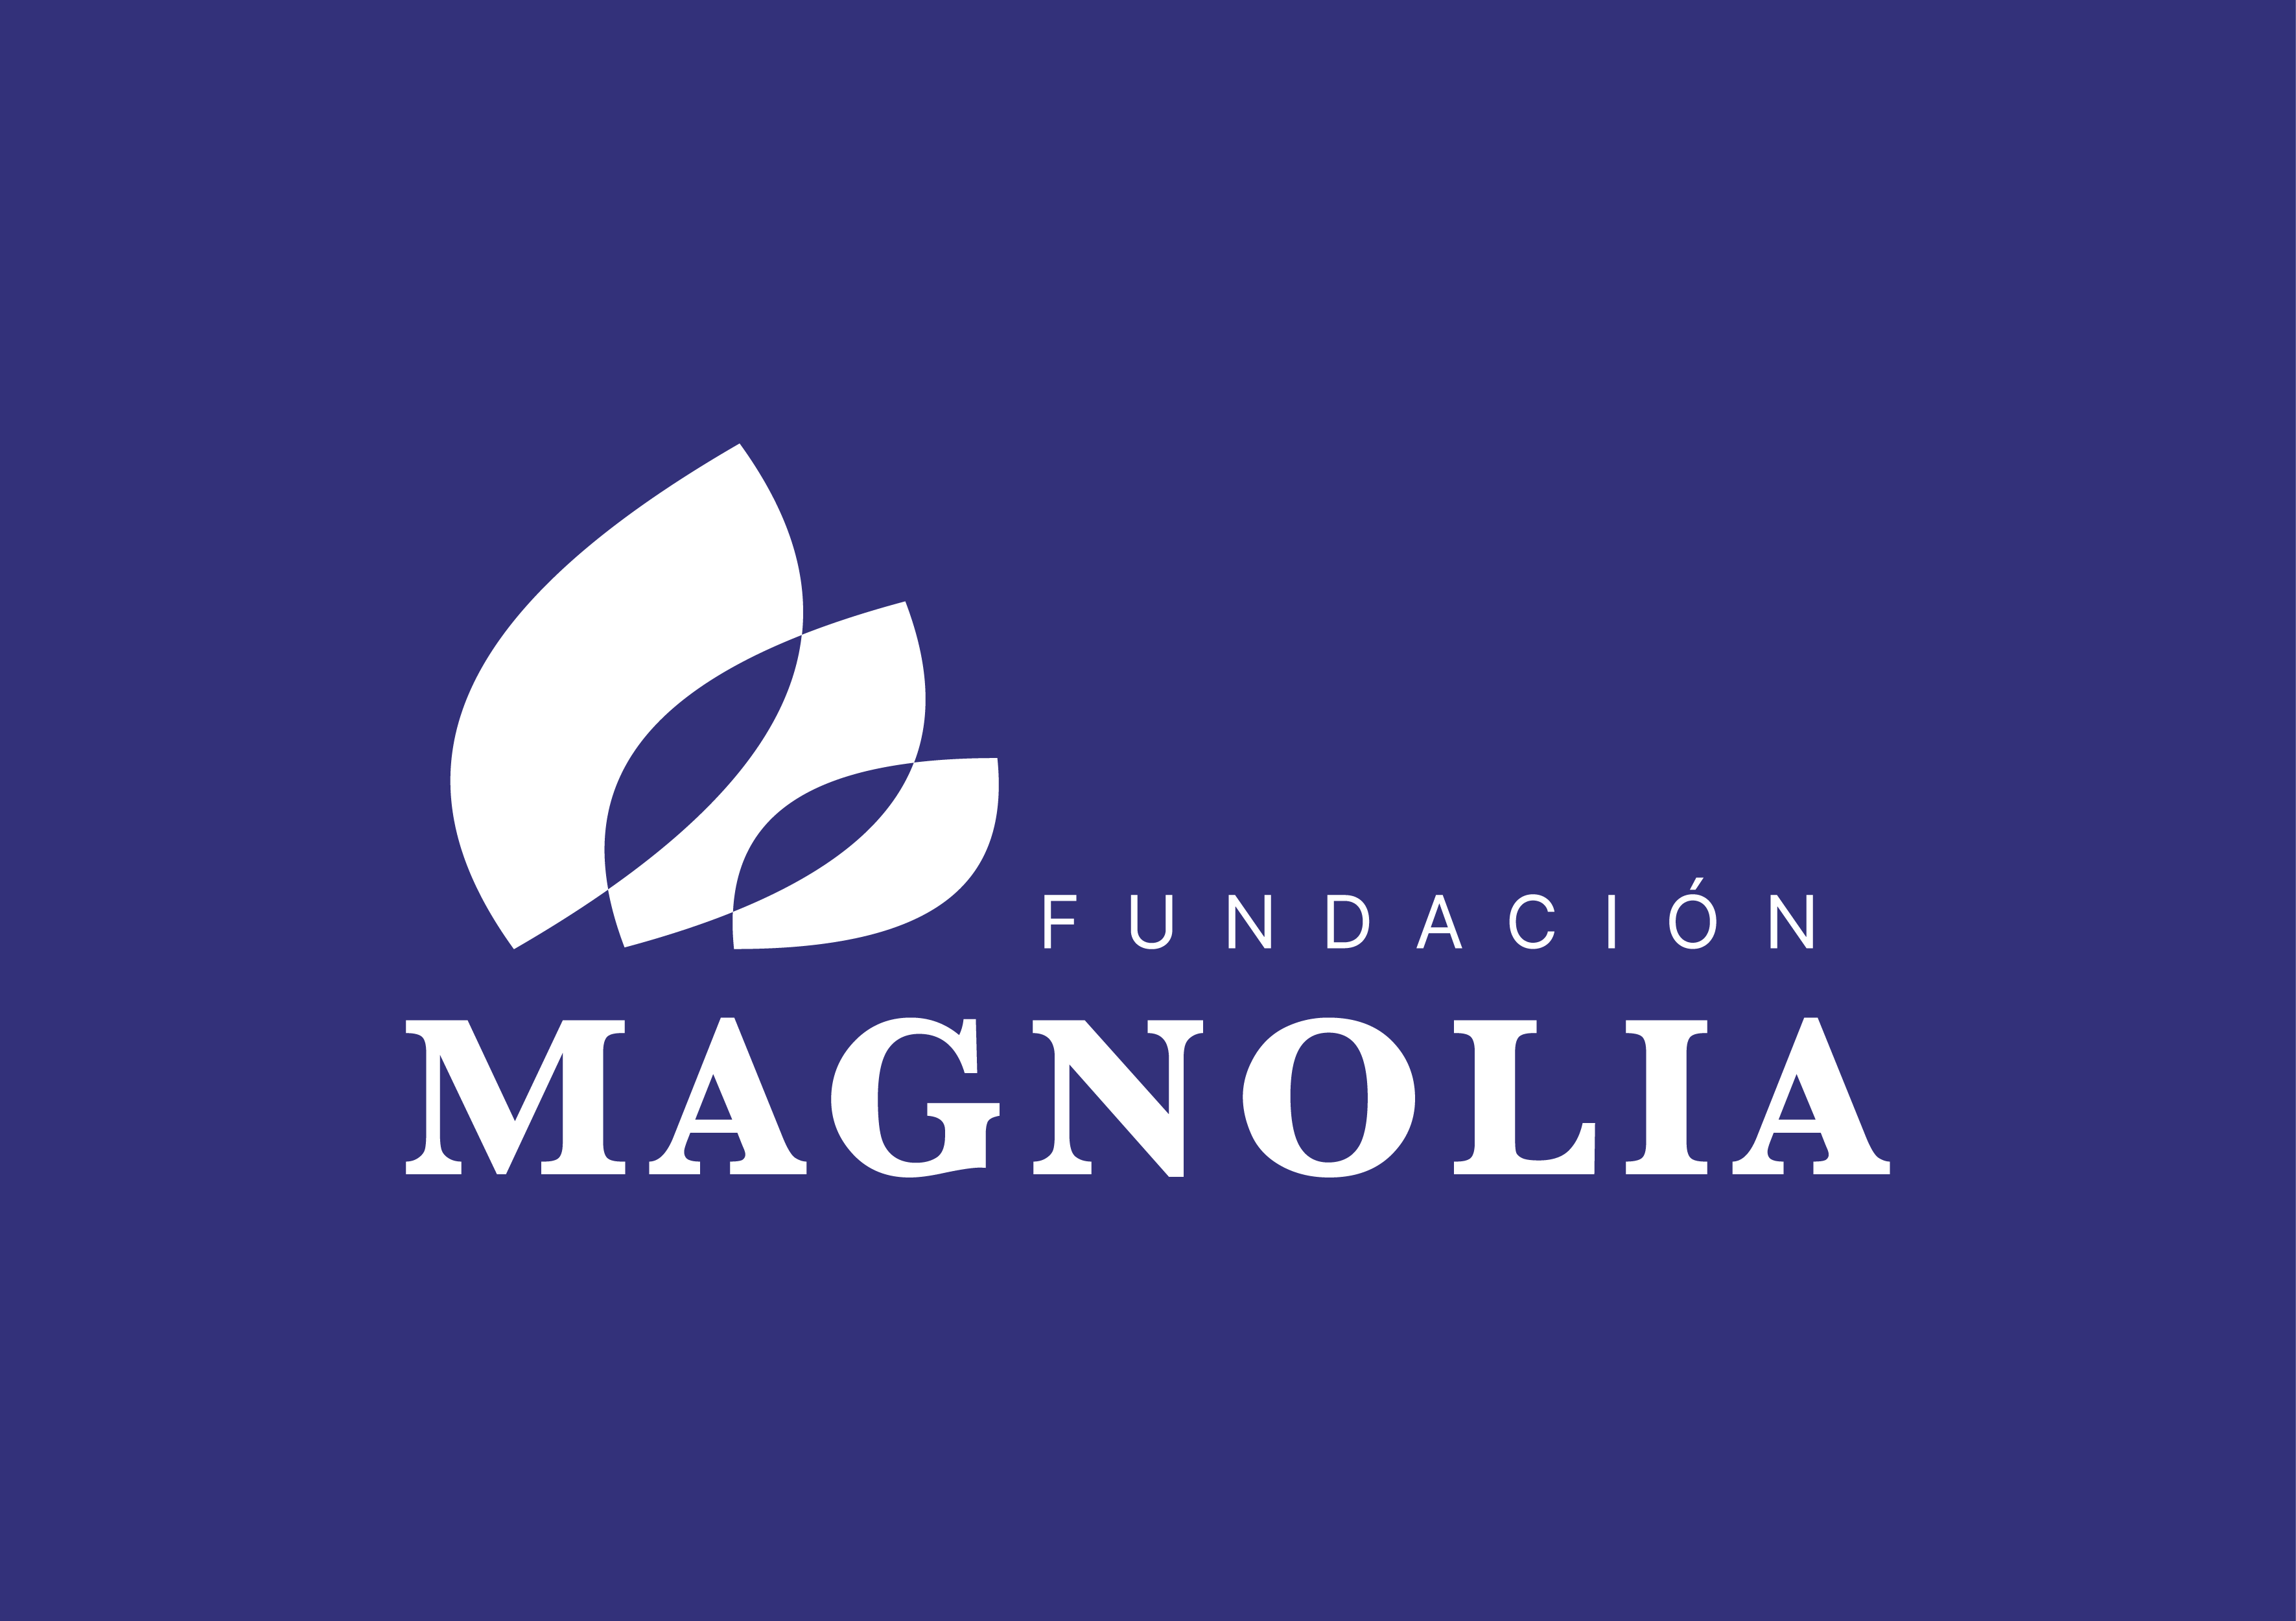 Magnolia Foundation logo